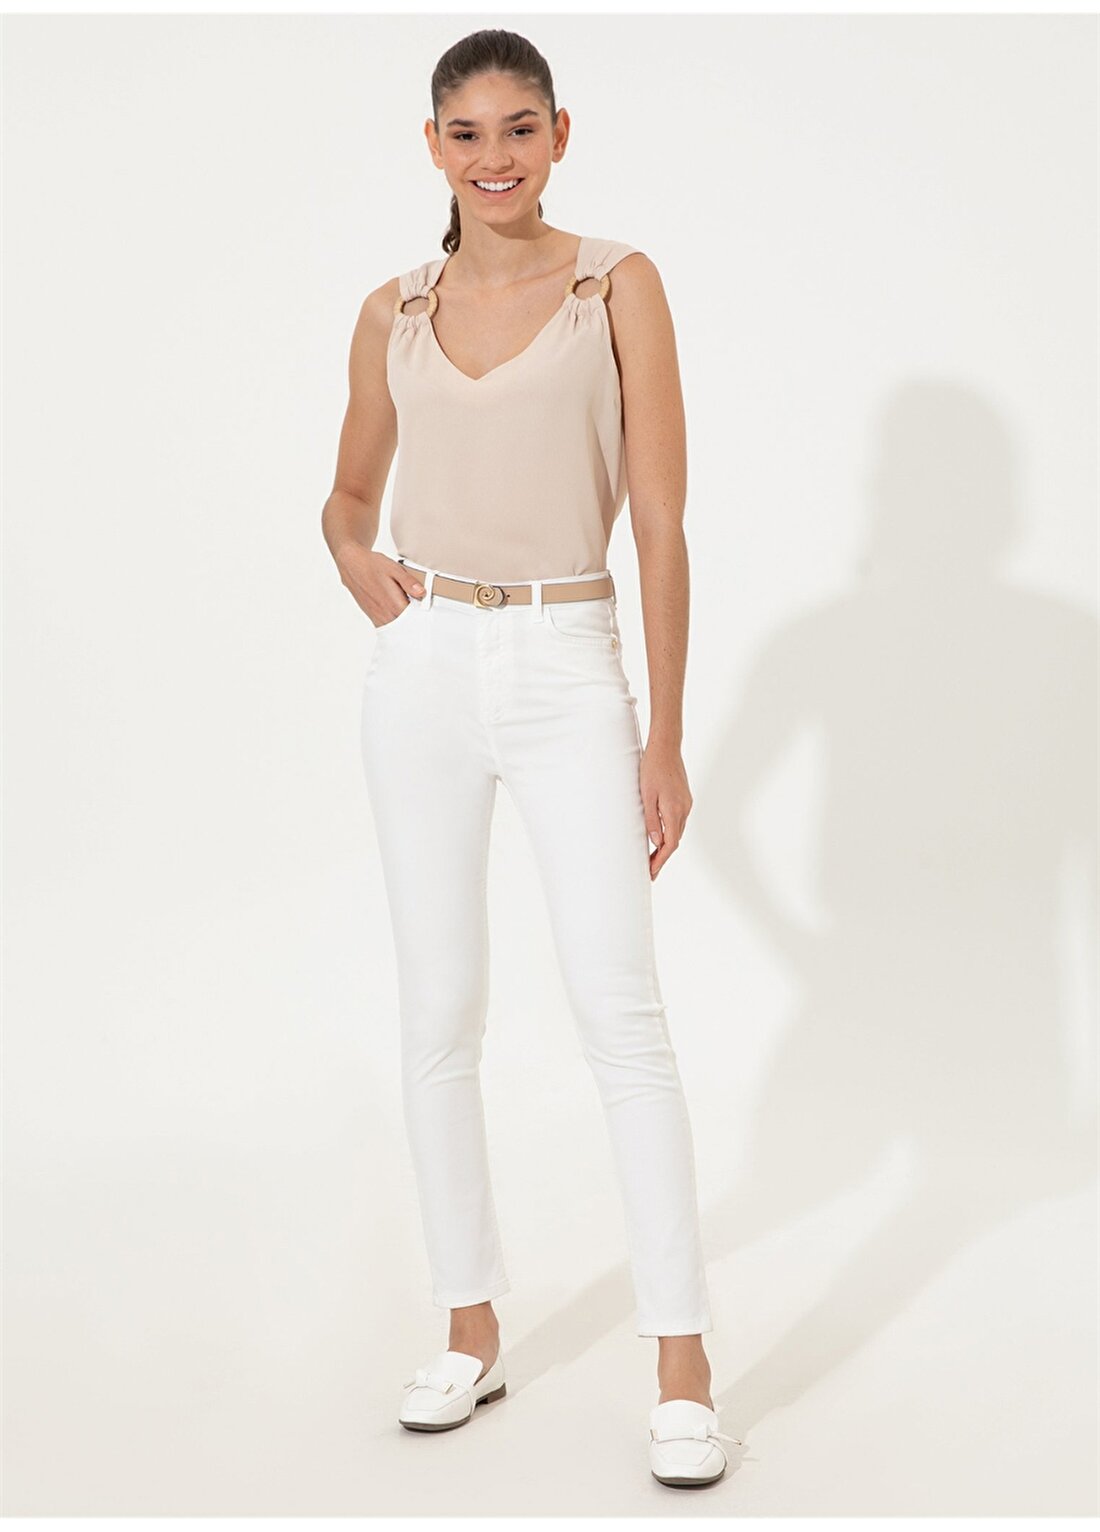 Pierre Cardin Derin-22Y Yüksek Bel Skinny Fit Düz Beyaz Kadın Pantolon